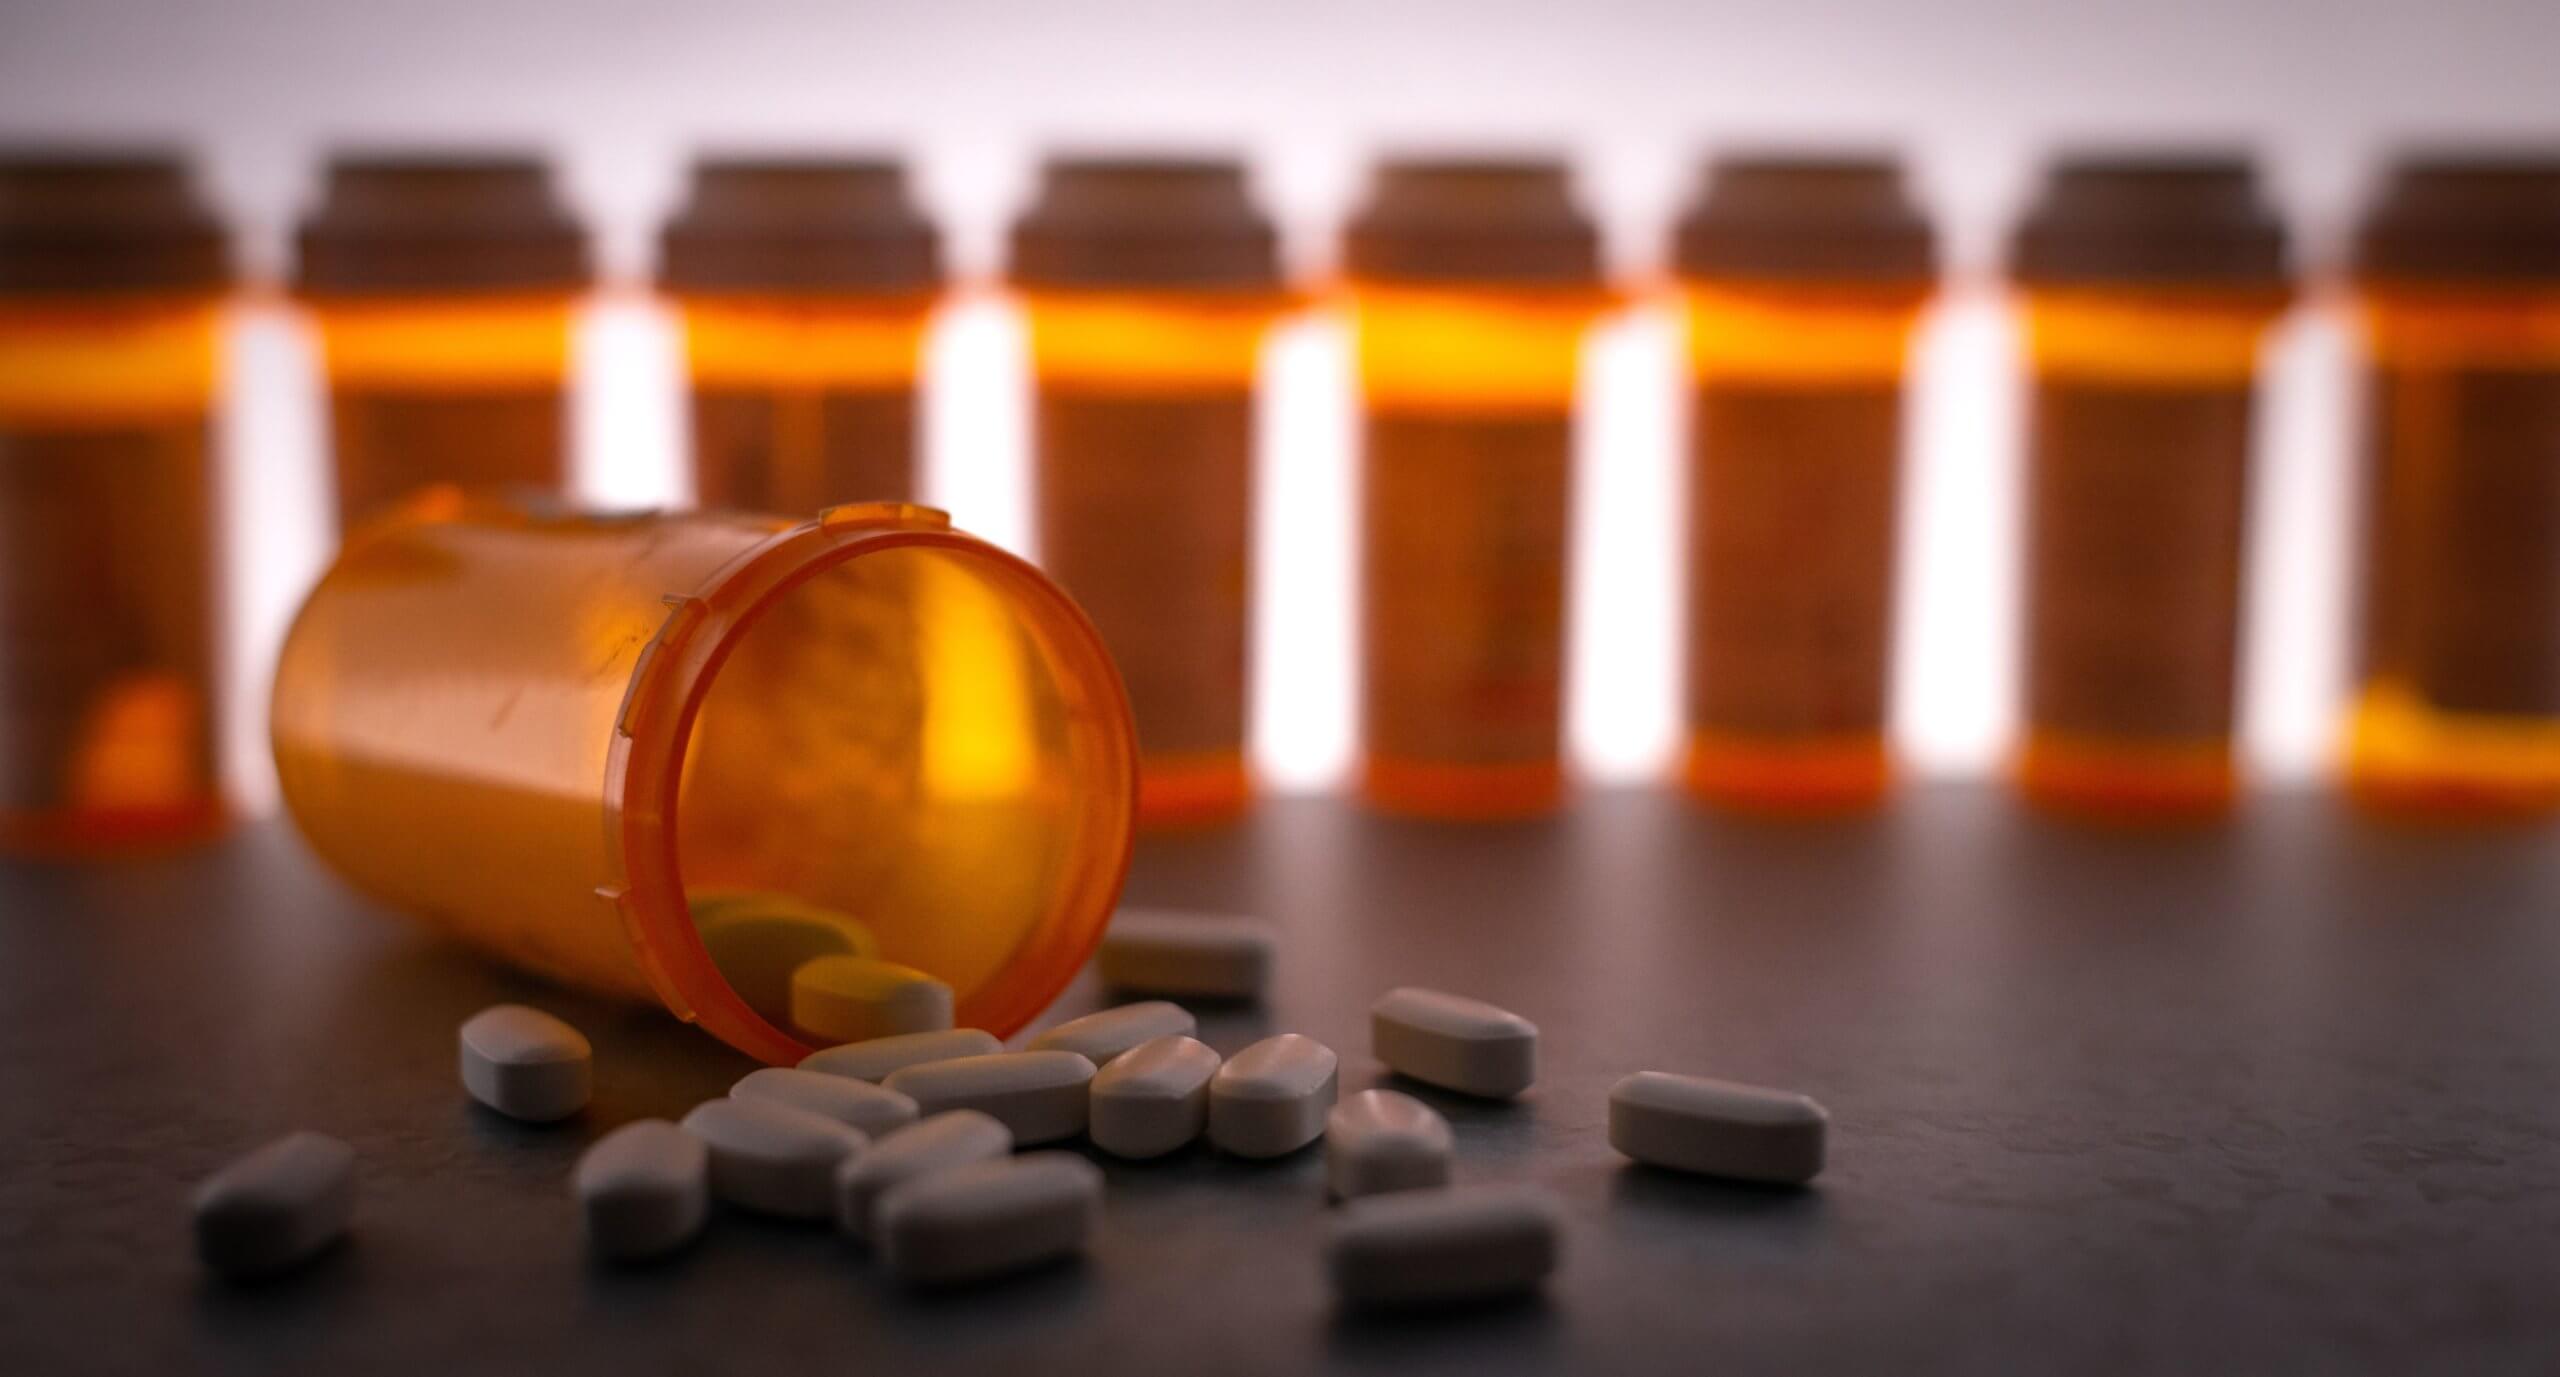 Colorado Opioid Epidemic and Addiction Statistics